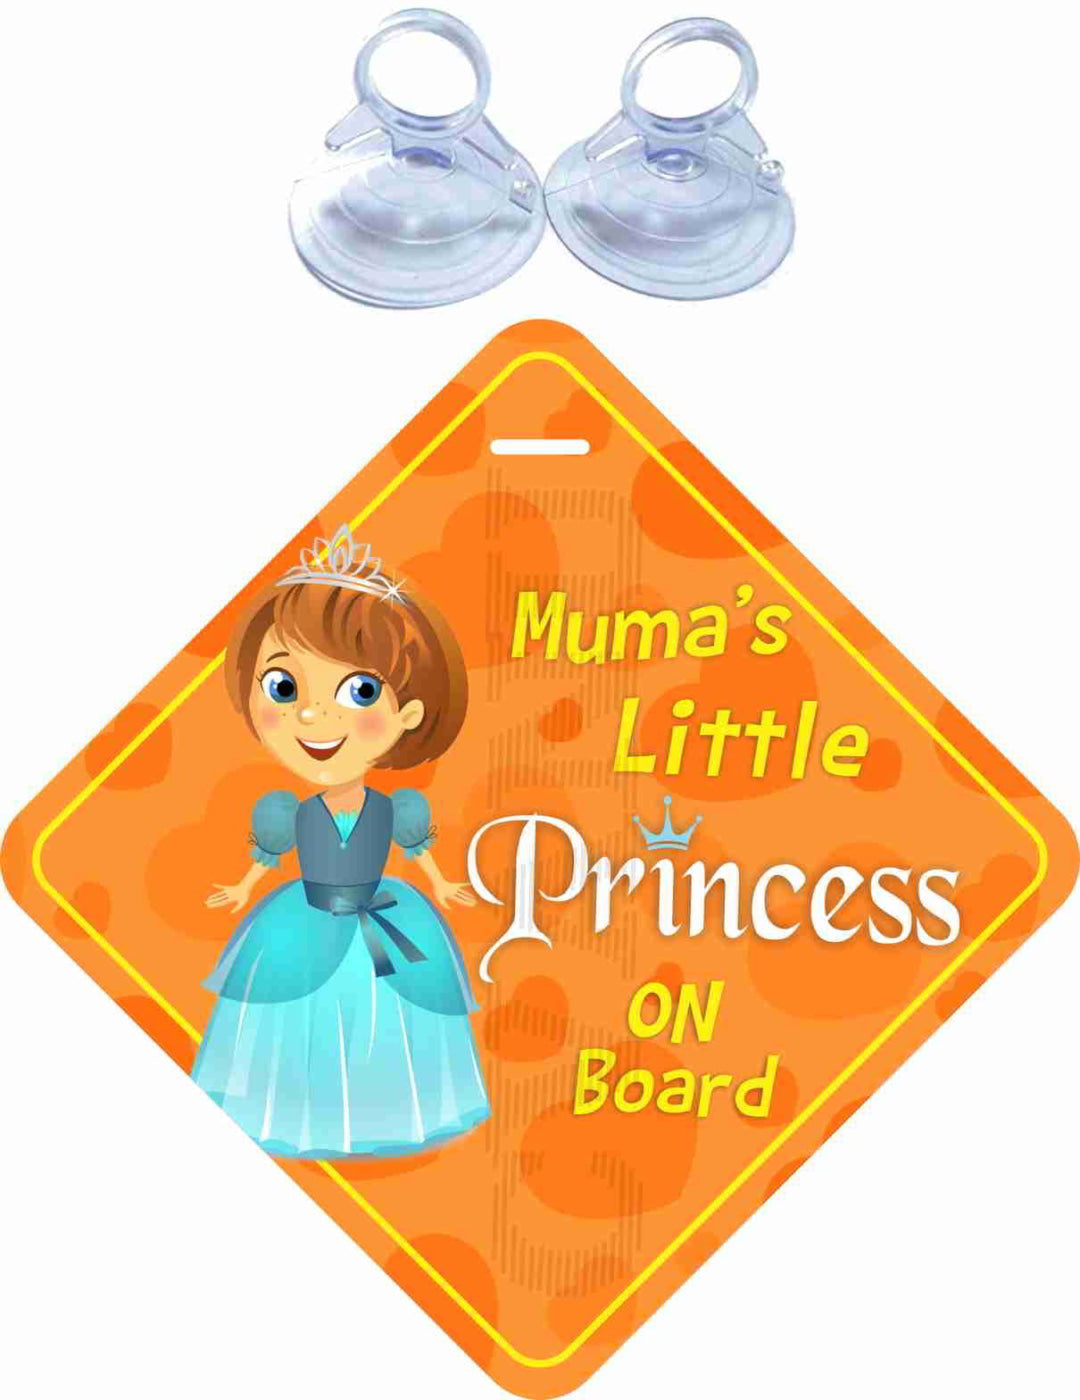 Mum's Little Princess on Board Safety Warning Sticker